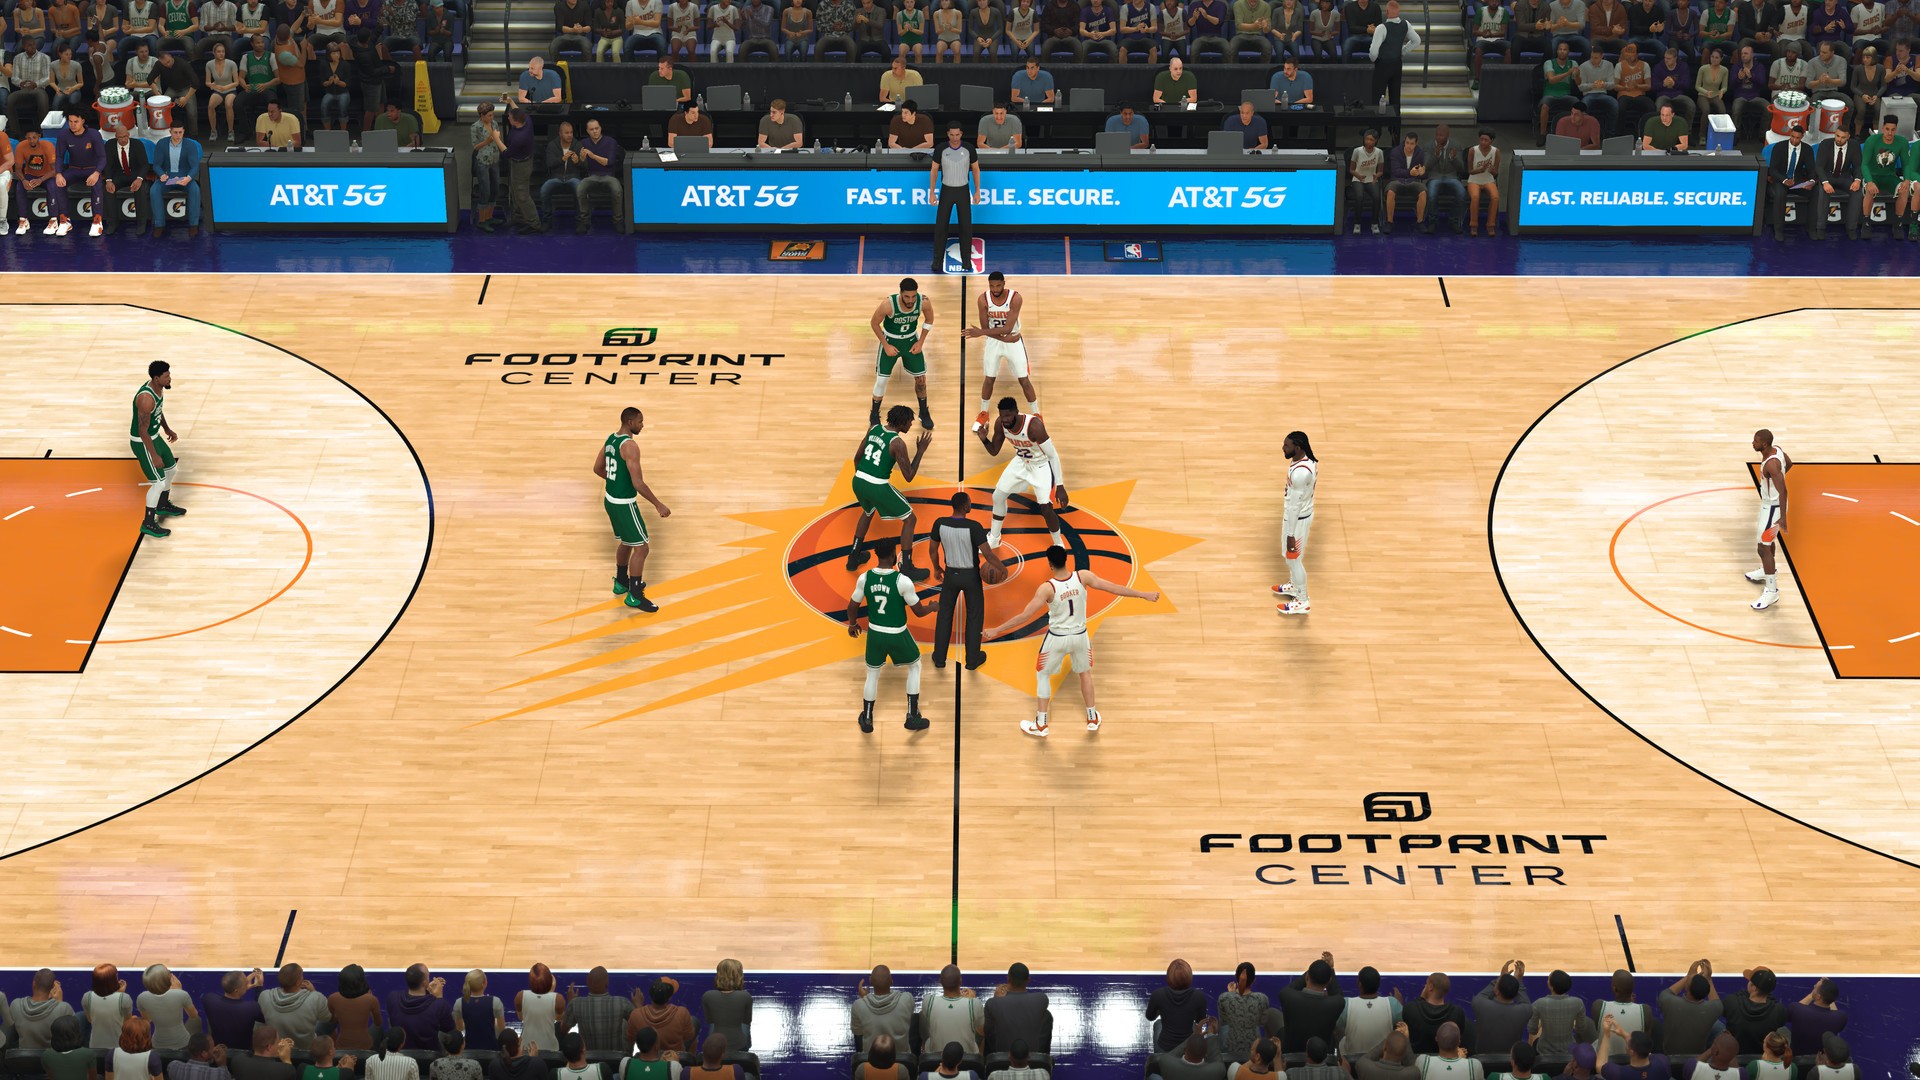 Video Game NBA 2K23 4k Ultra HD Wallpaper